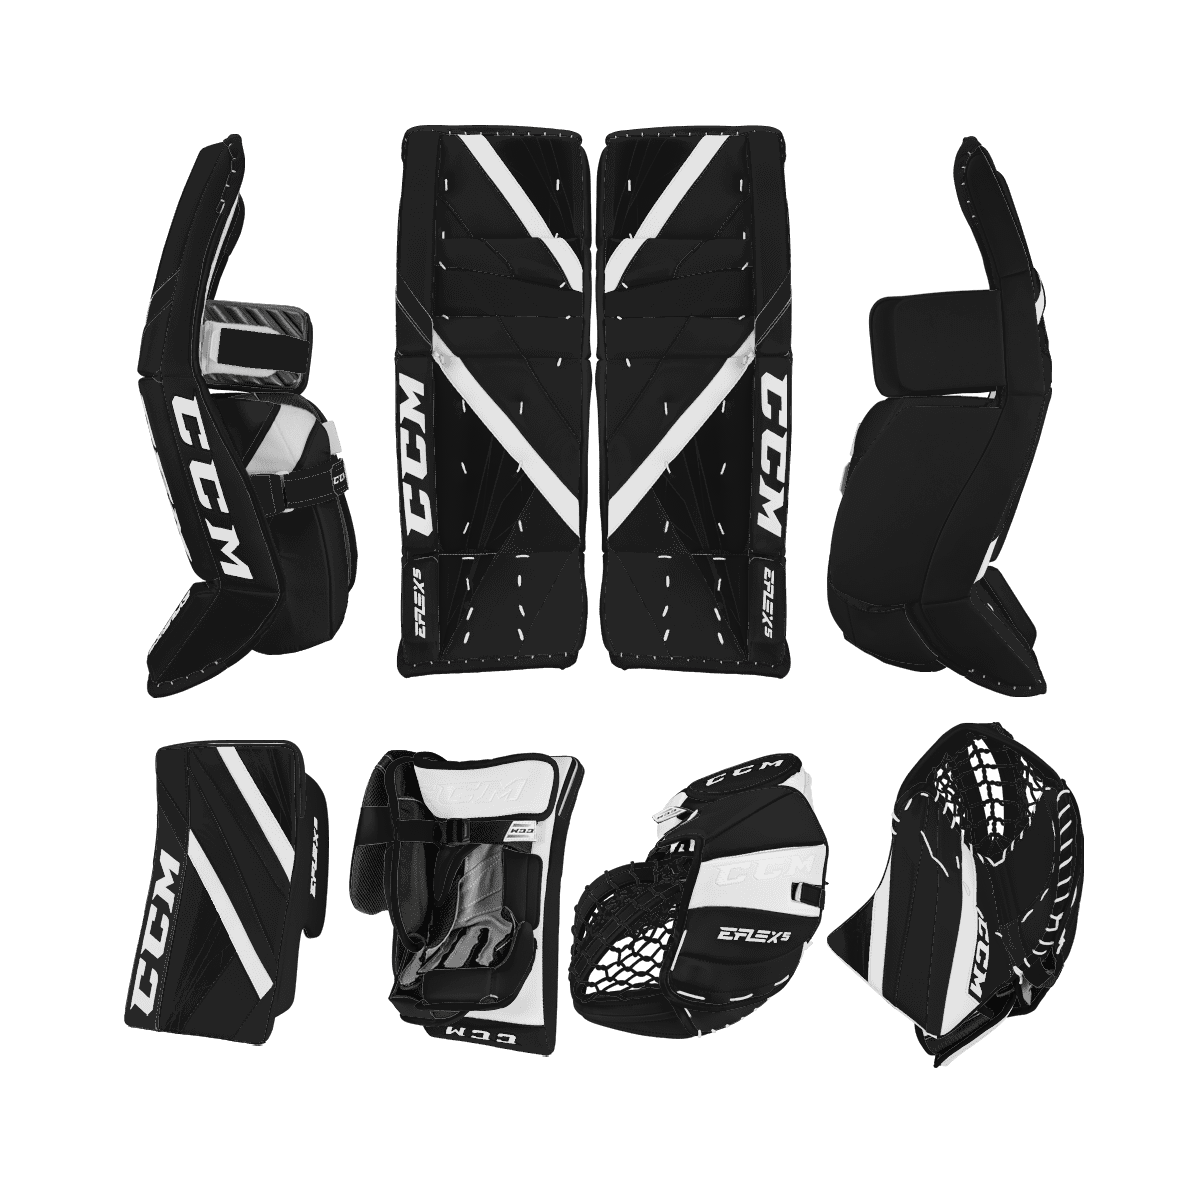 CCM Extreme Flex 5 Pro Goalie Equipment - Custom Design - Intermediate Black/White Inspiration